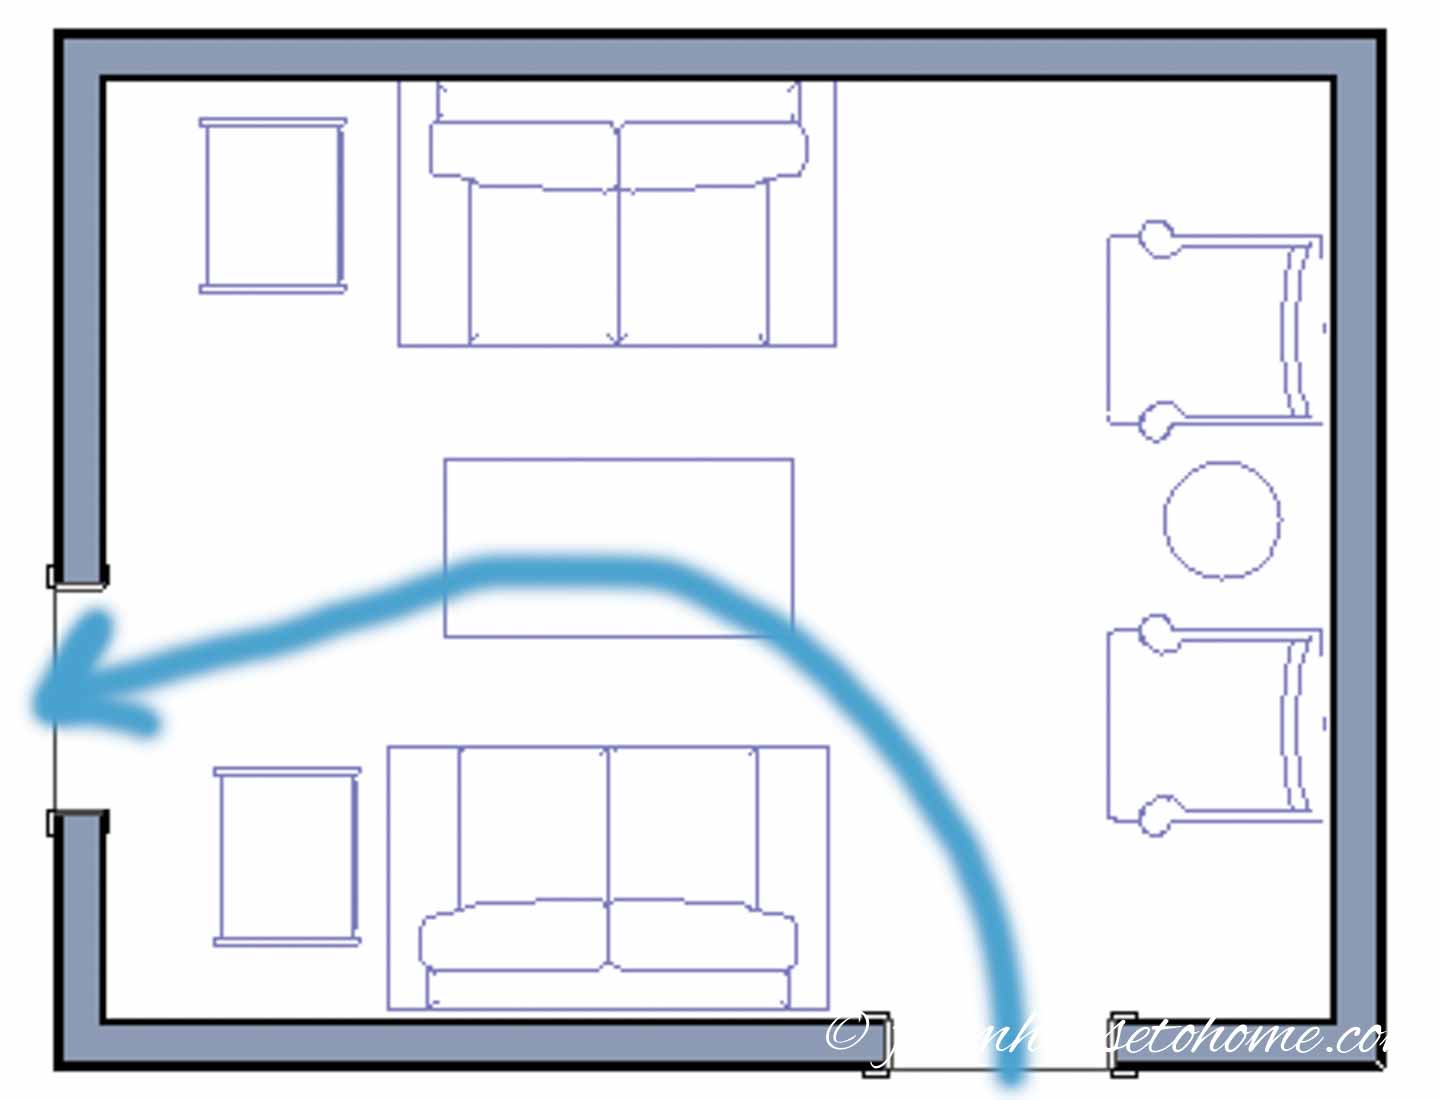 Living room traffic flow diagram